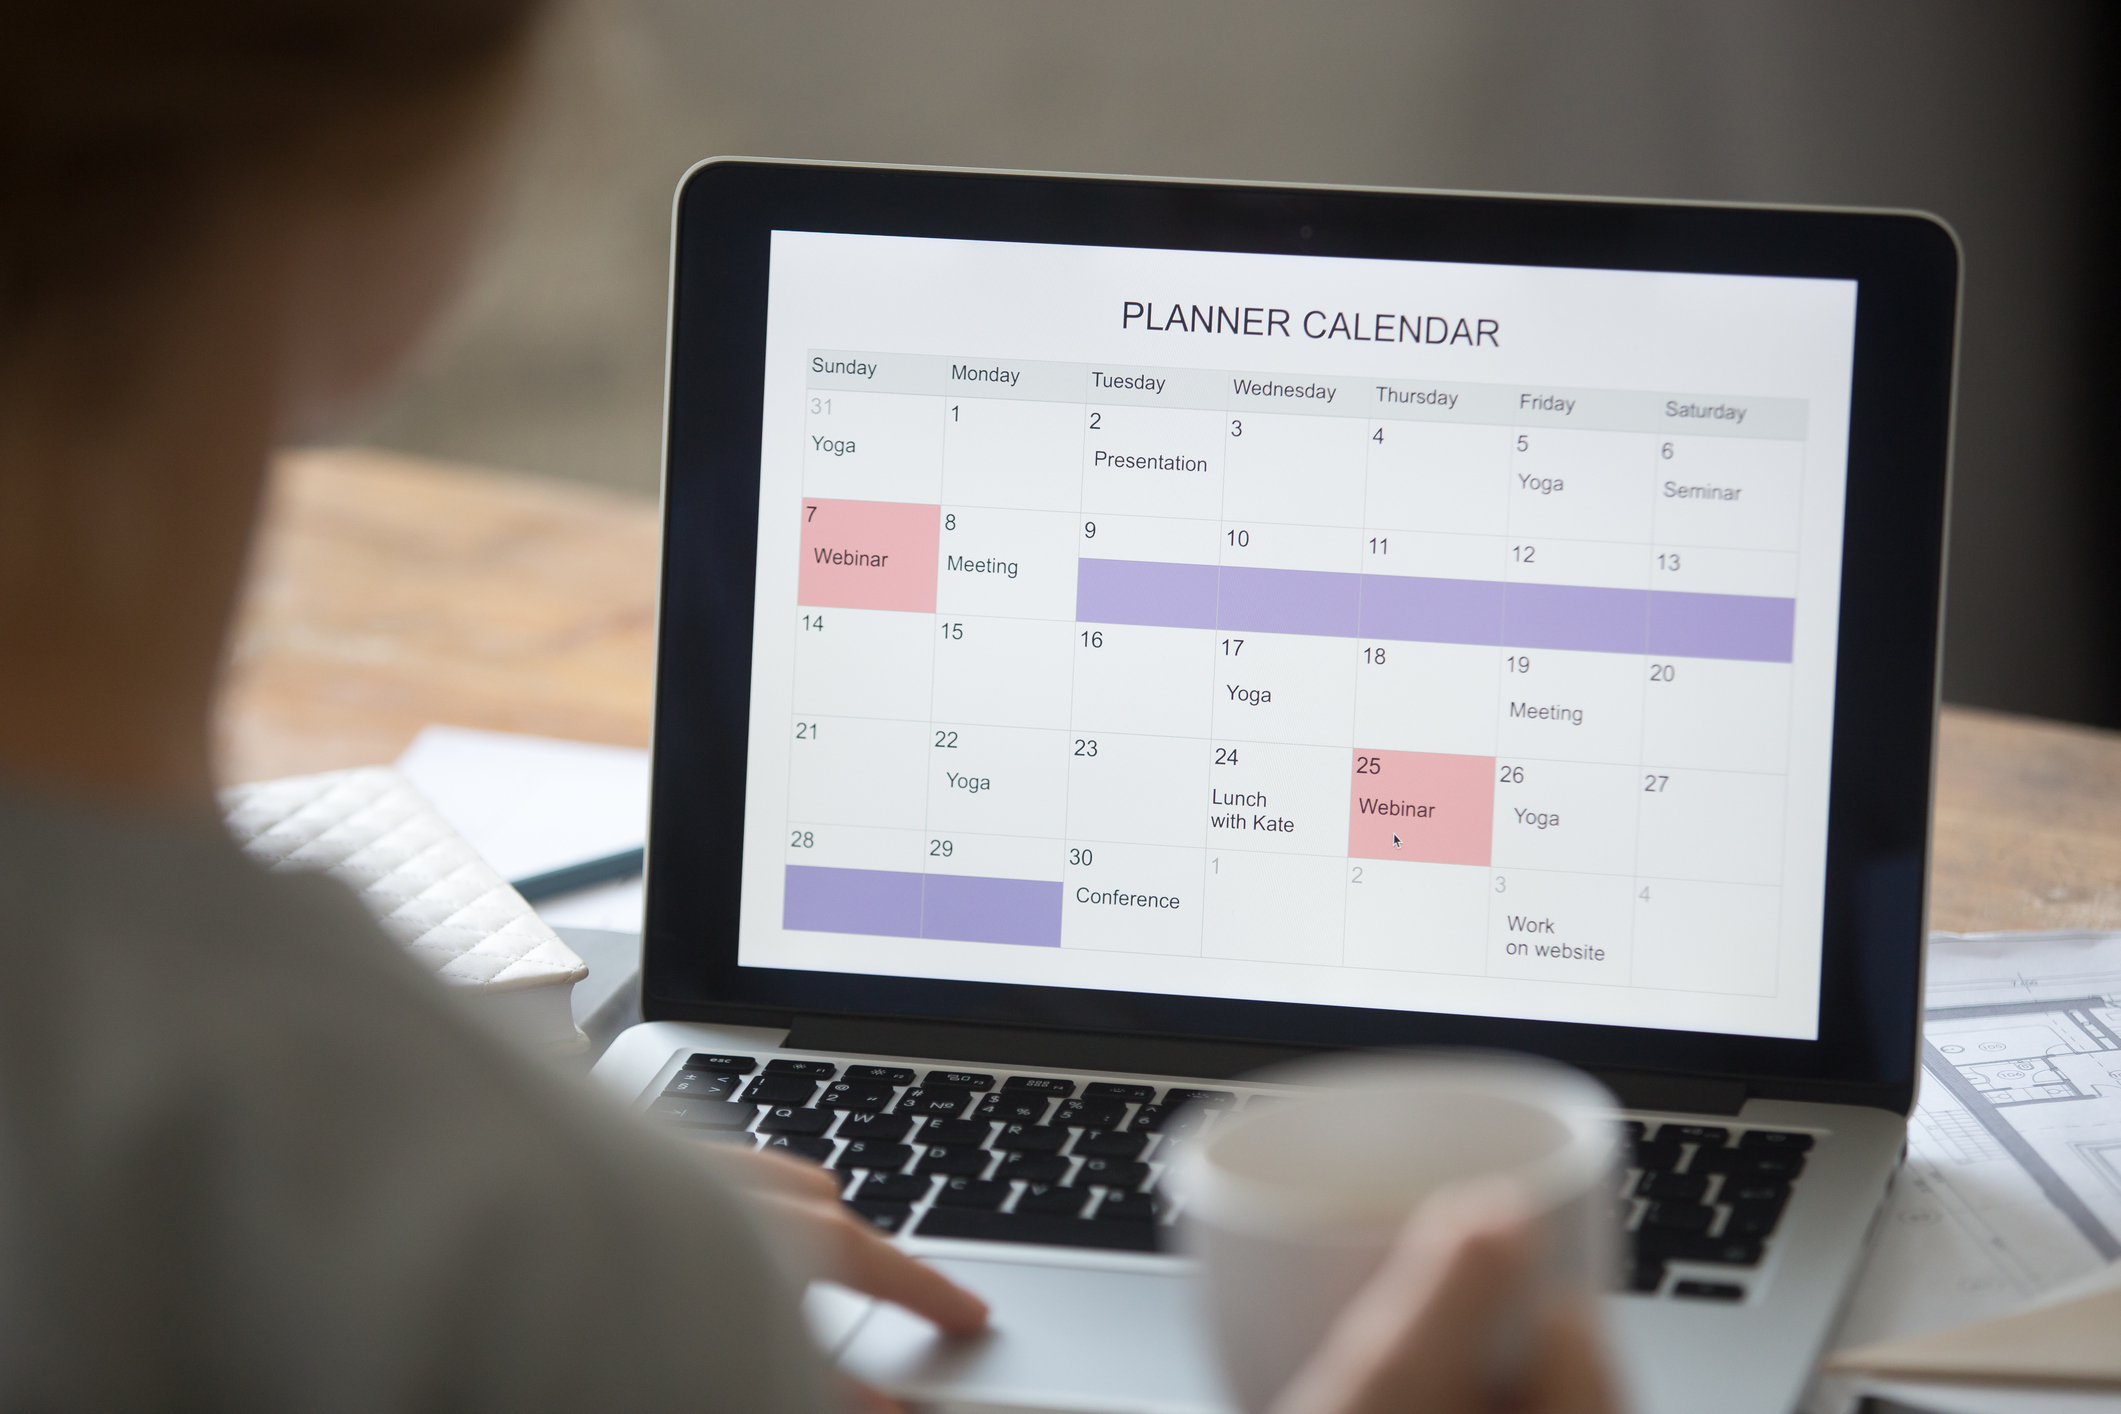 Open laptop on the desk, planner calendar on the screen